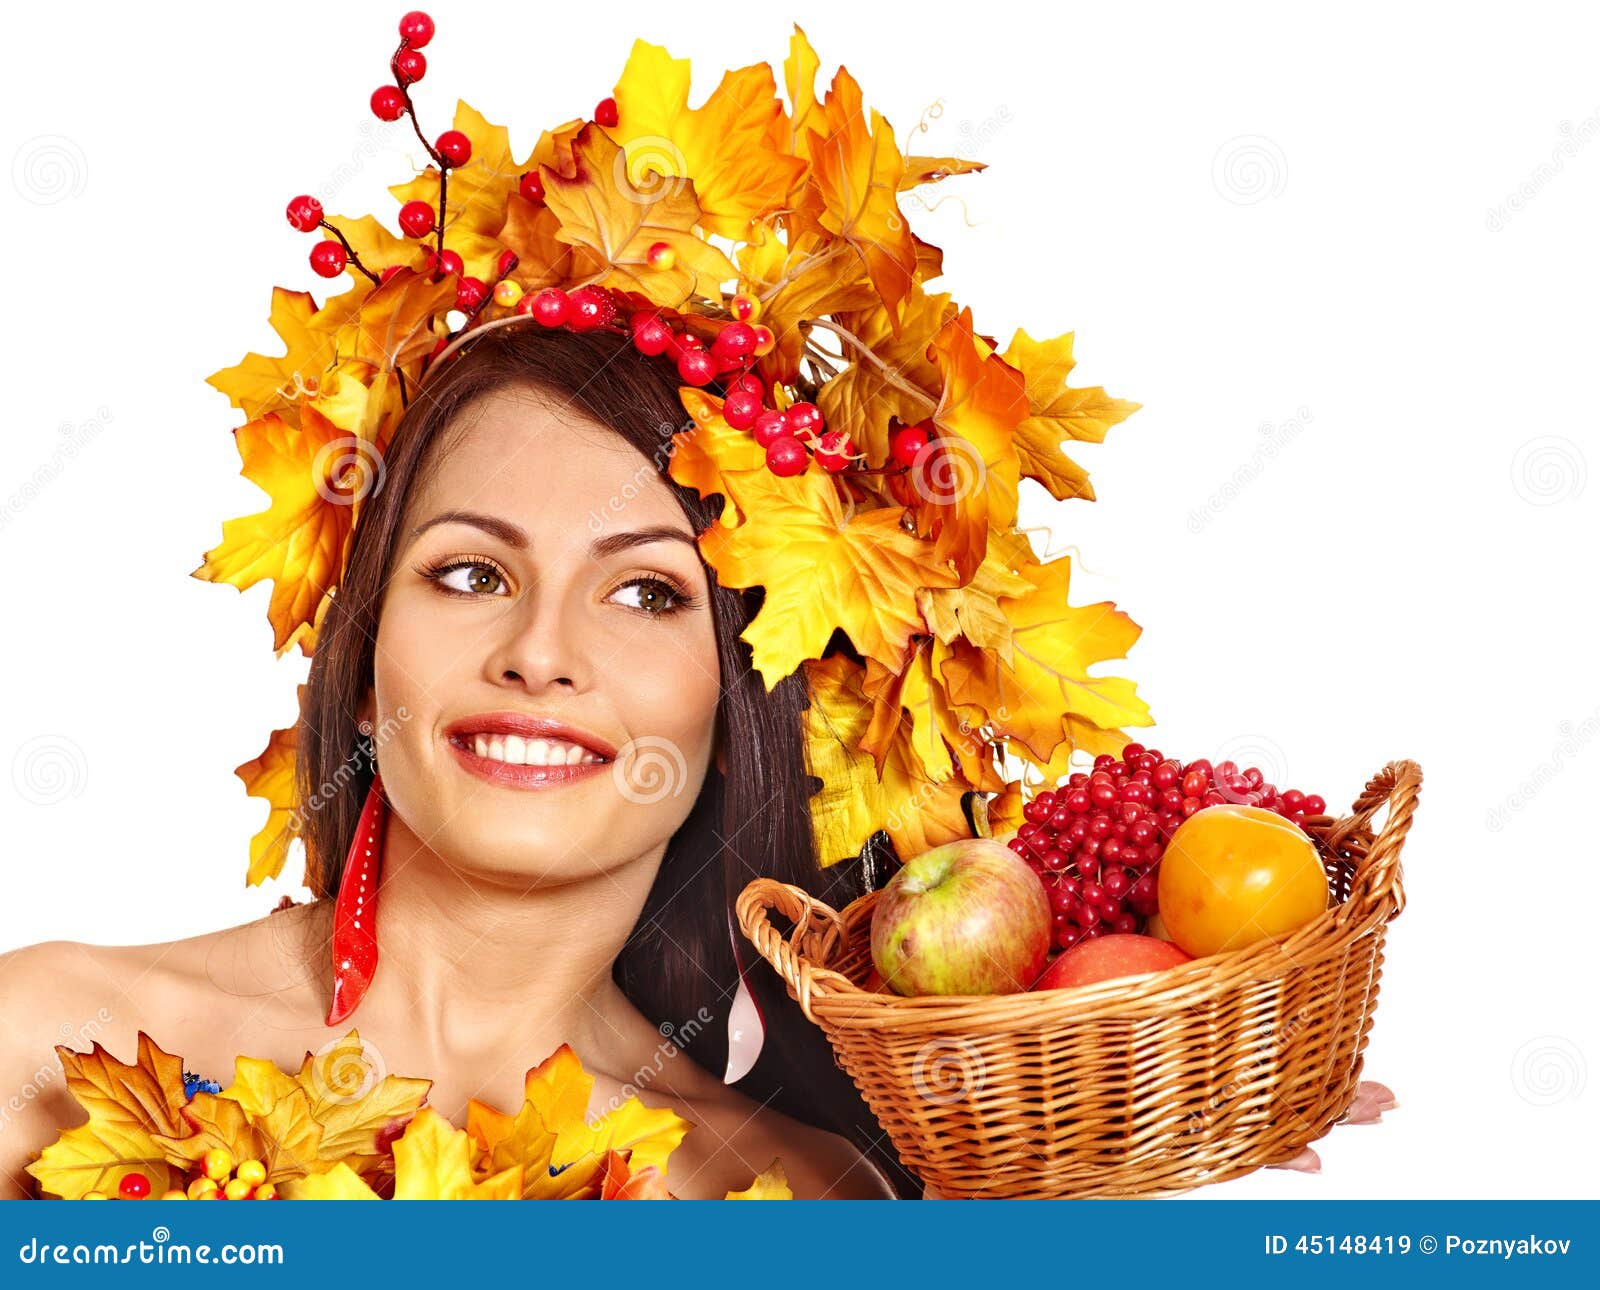 Girl Holding Basket with Fruit. Stock Image - Image of caucasian ...